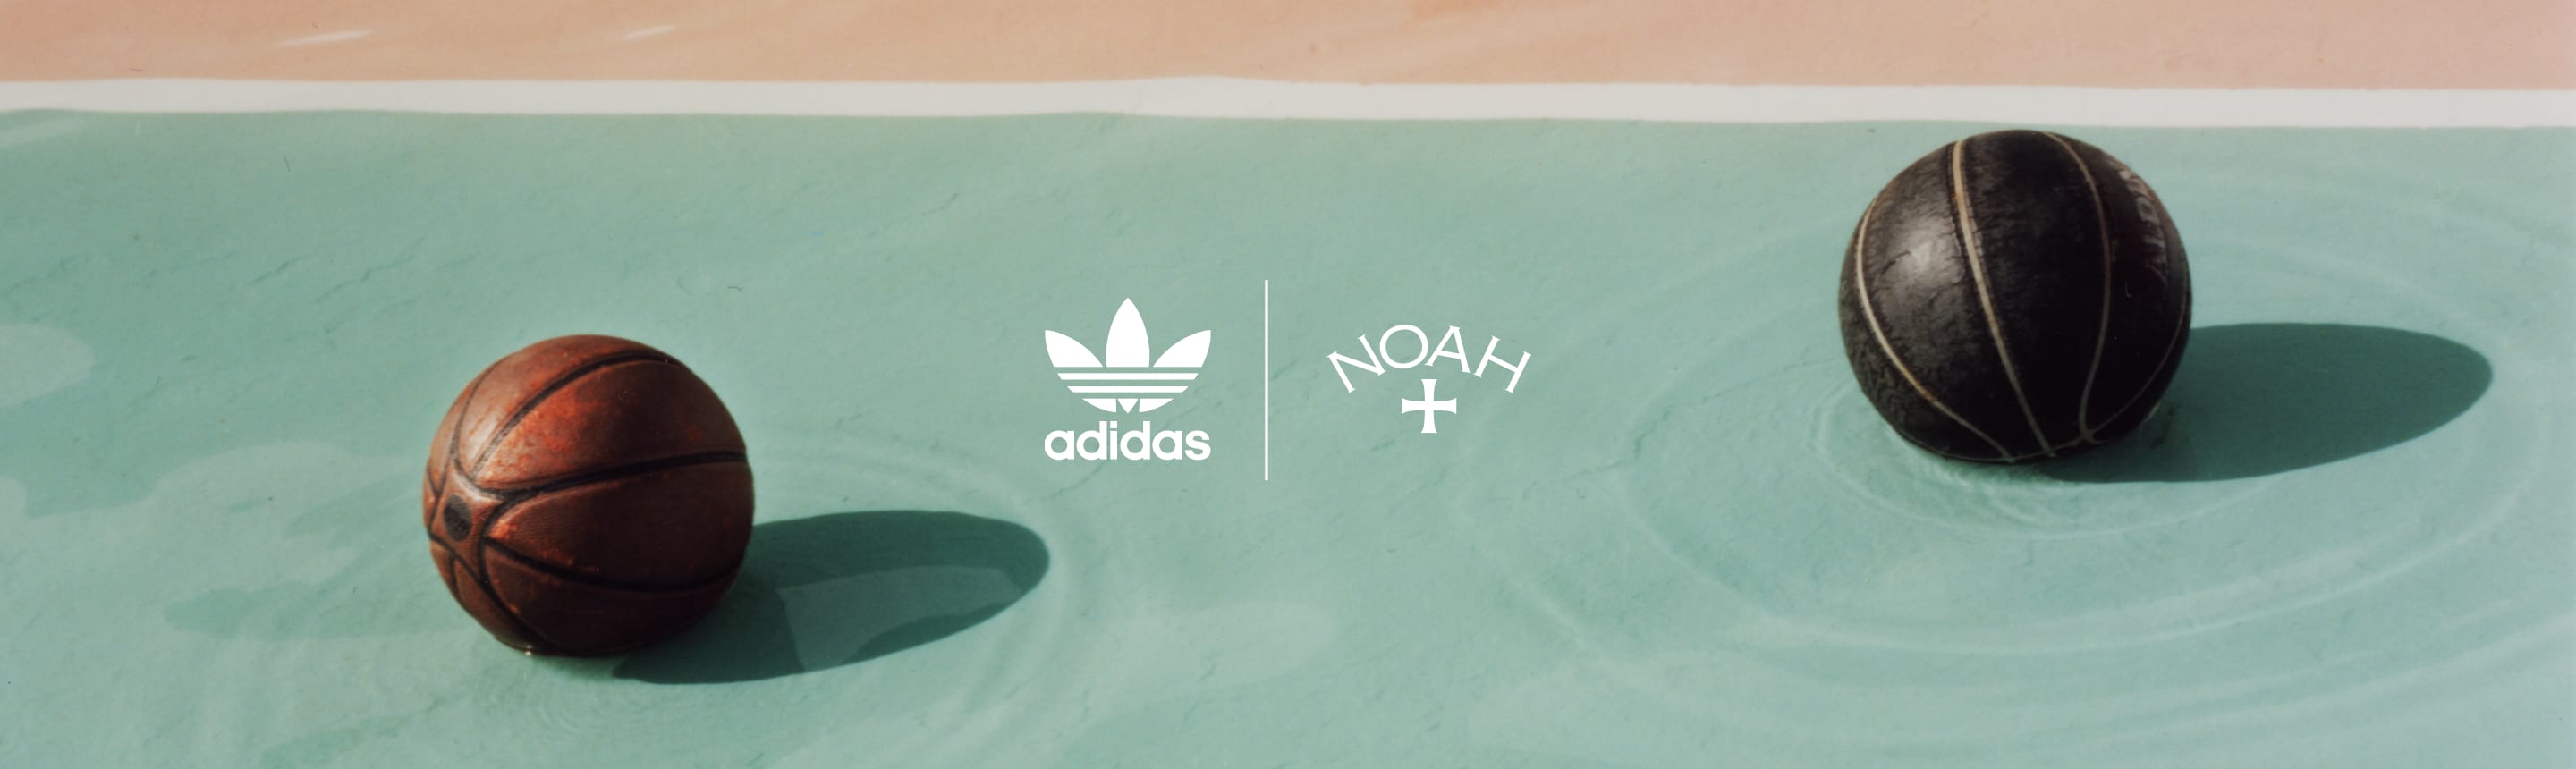 ADIDAS ORIGINALS BY NOAH | adidas UK